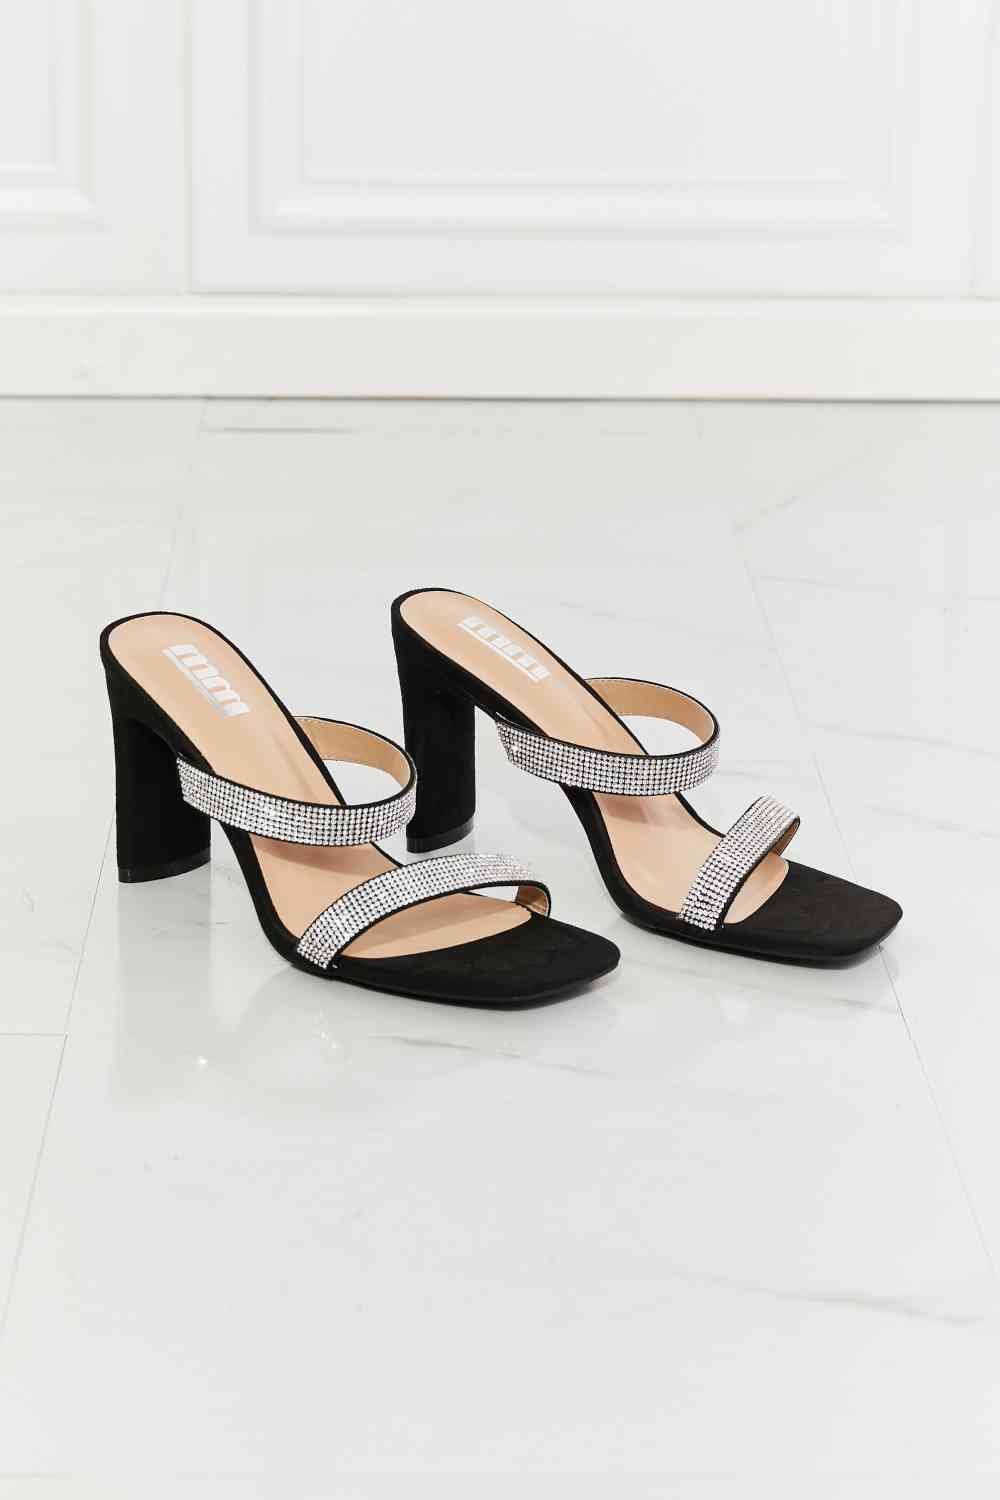 Leave A Little Sparkle Rhinestone Block Heel Sandal in Black - Accessories - Shoes - 6 - 2024